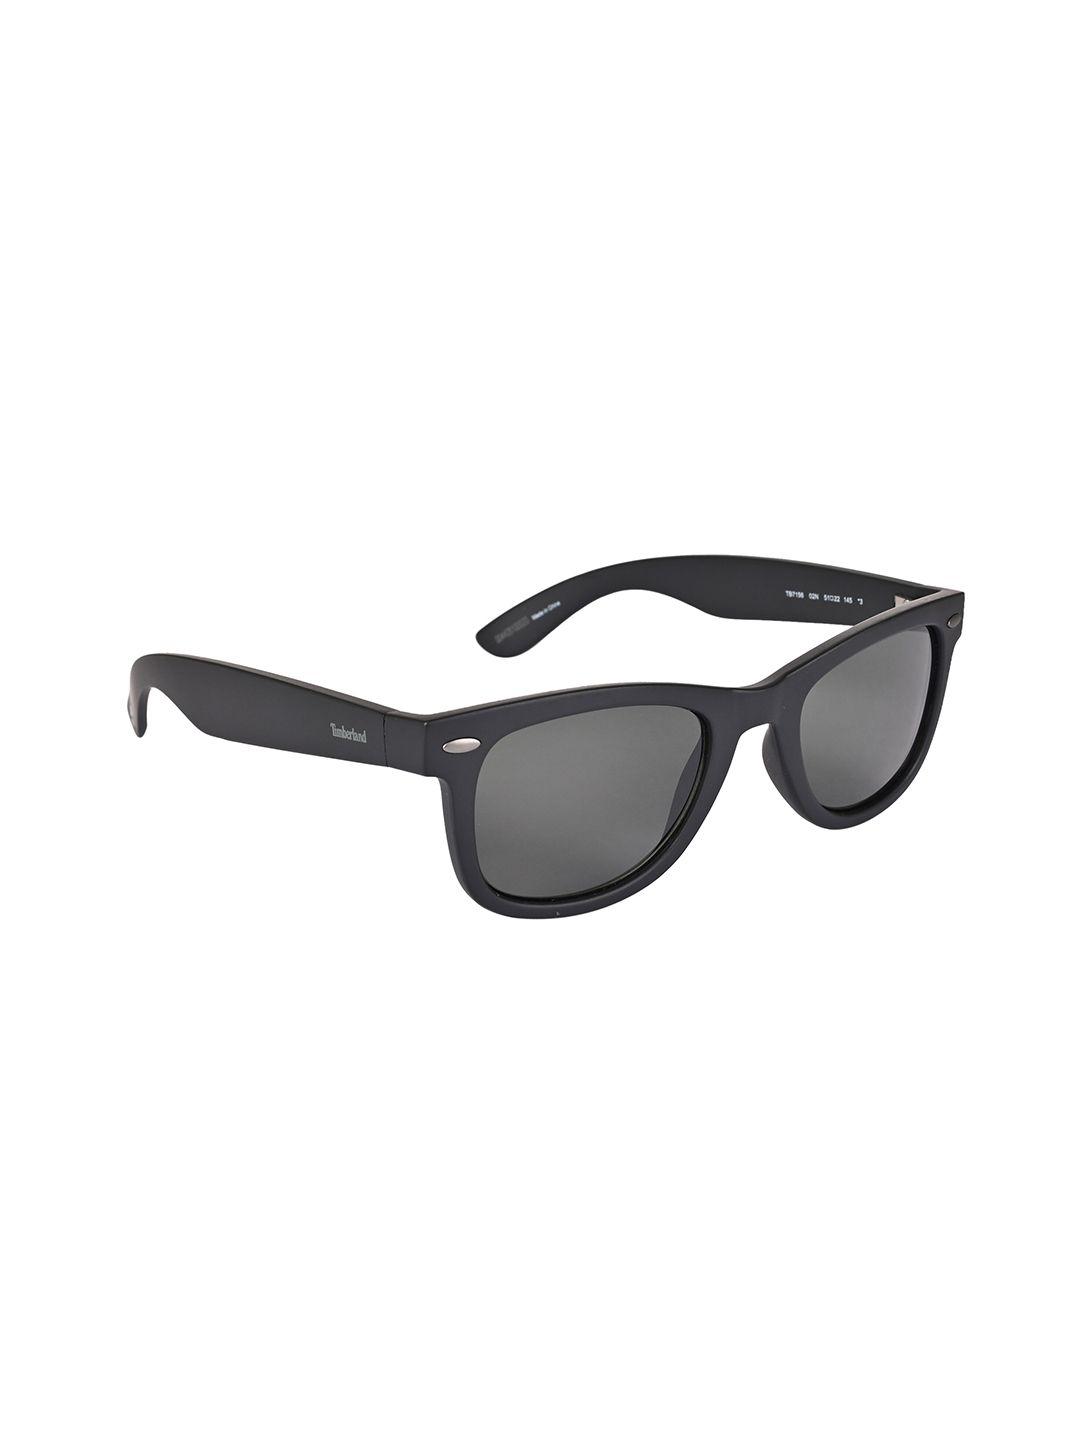 timberland men uv protective lens square sunglasses tb7156 51 02n